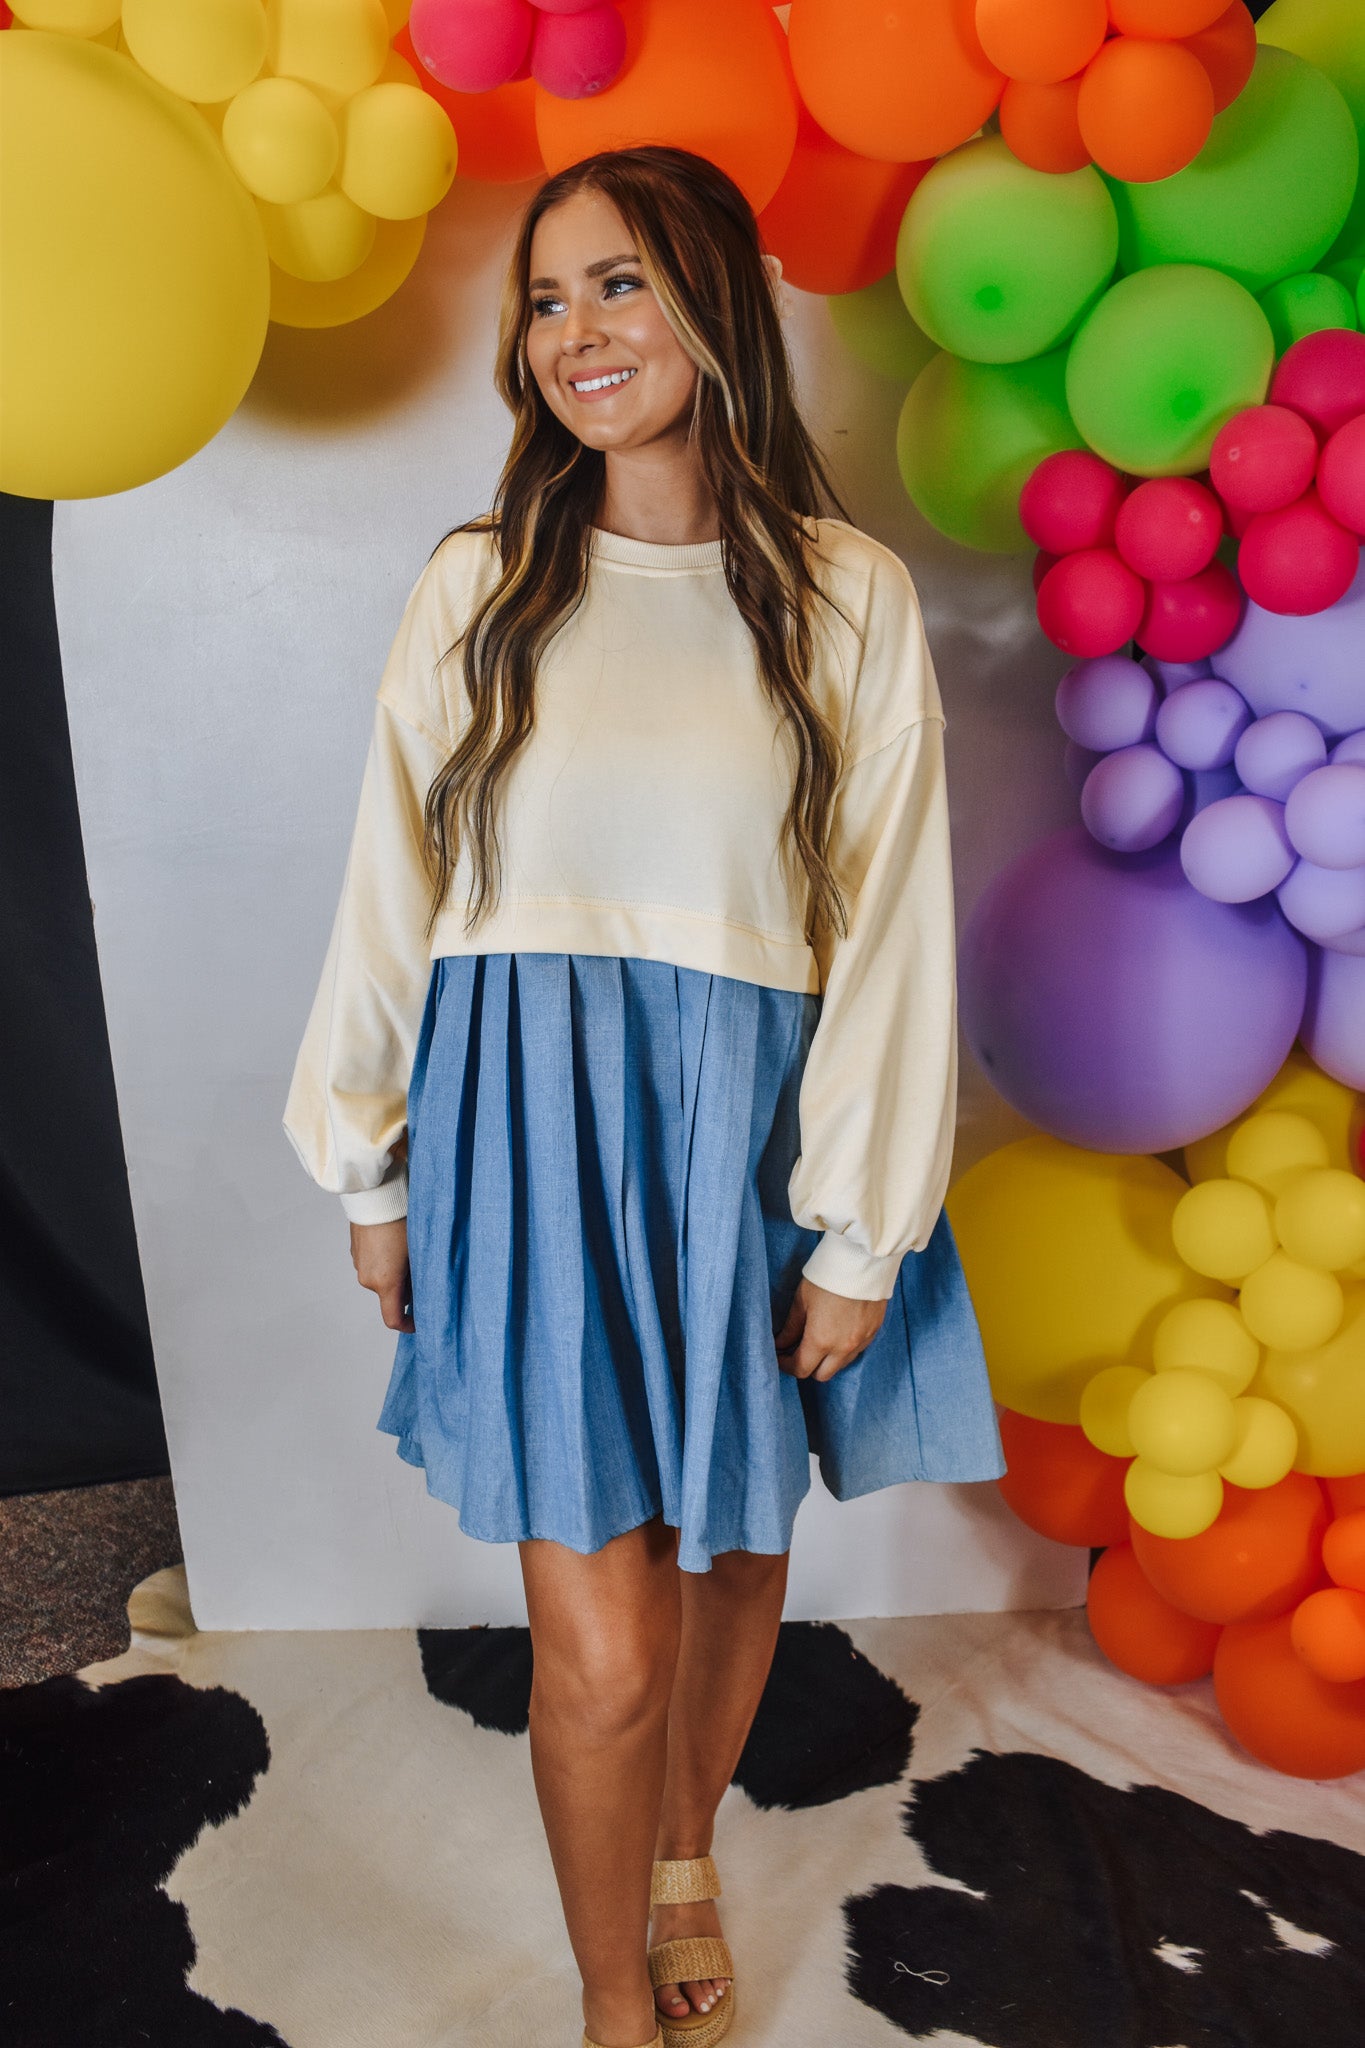 Ecru Sweatshirt Dress in Colorful Styling | SilkFred